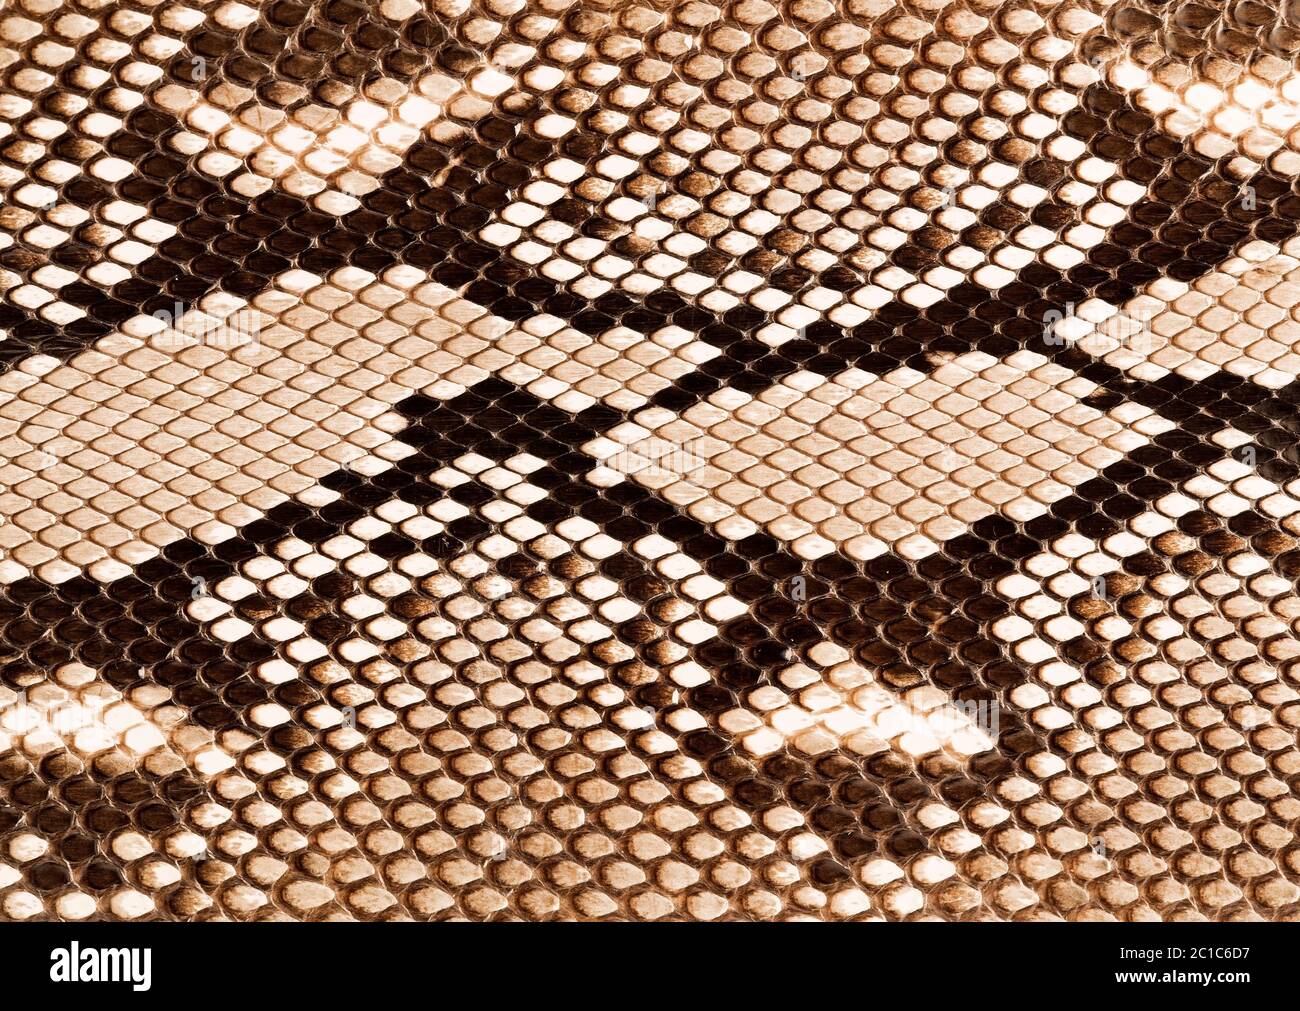 Snake skin texture close up Stock Photo